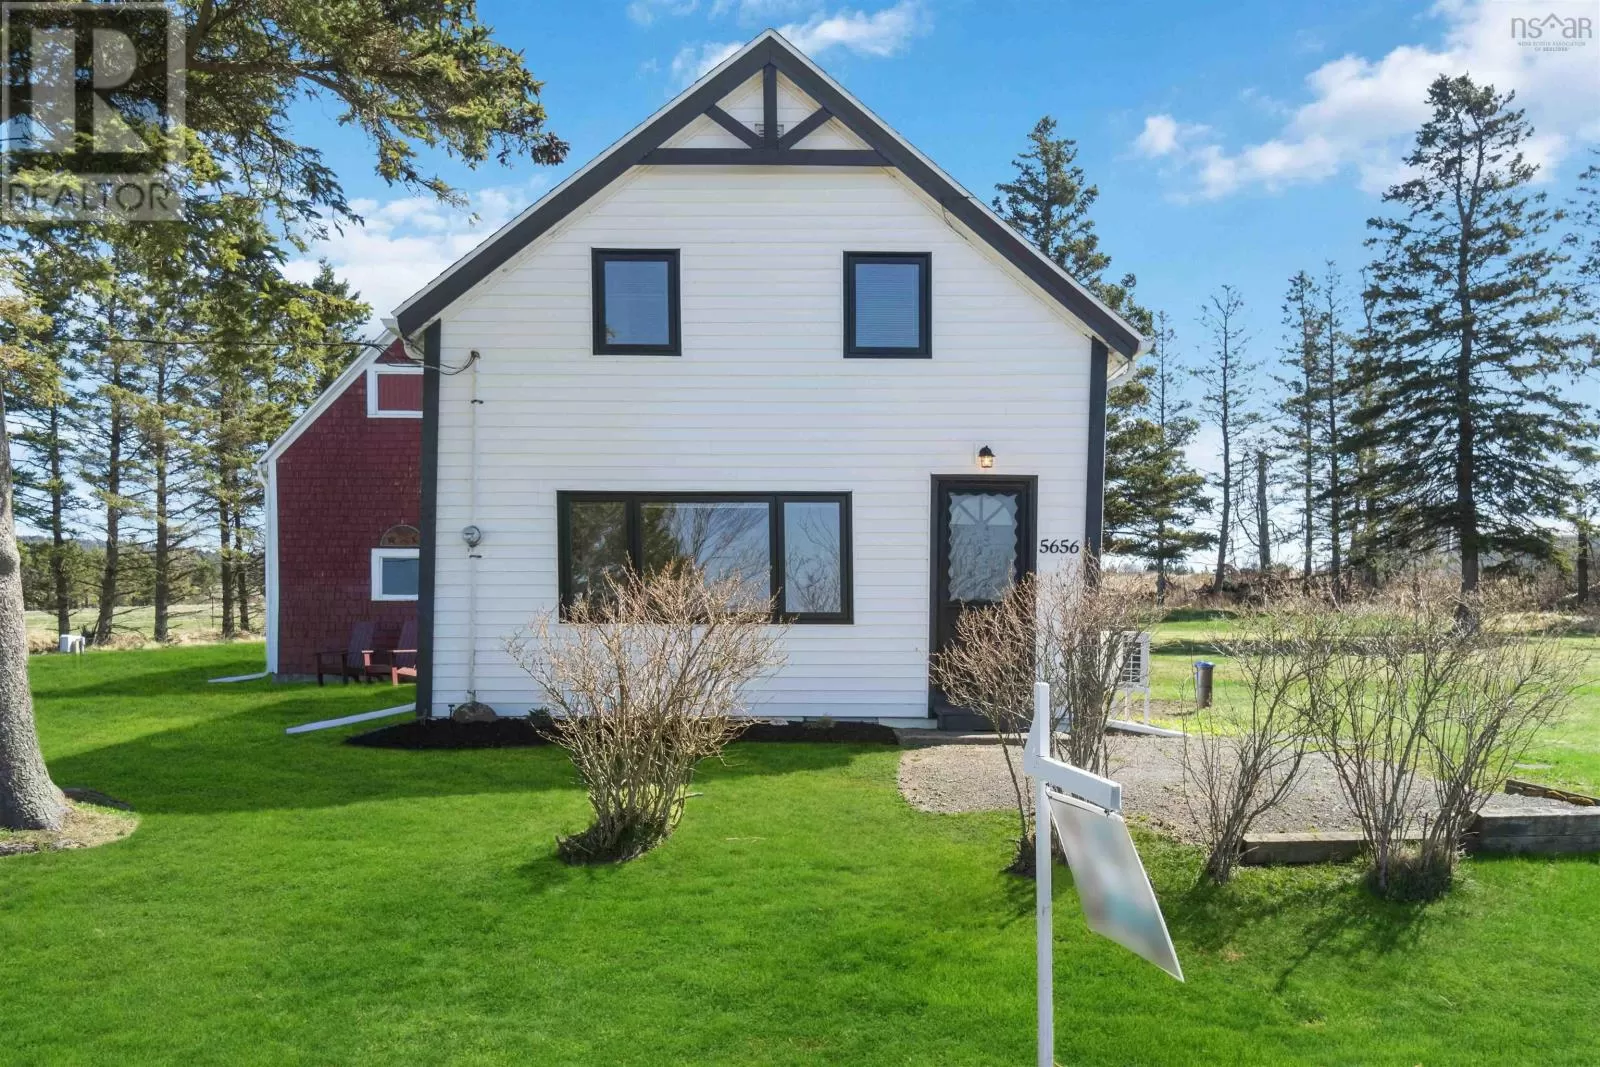 House for rent: 5656 Highway 358, Scots Bay, Nova Scotia B0P 1H0